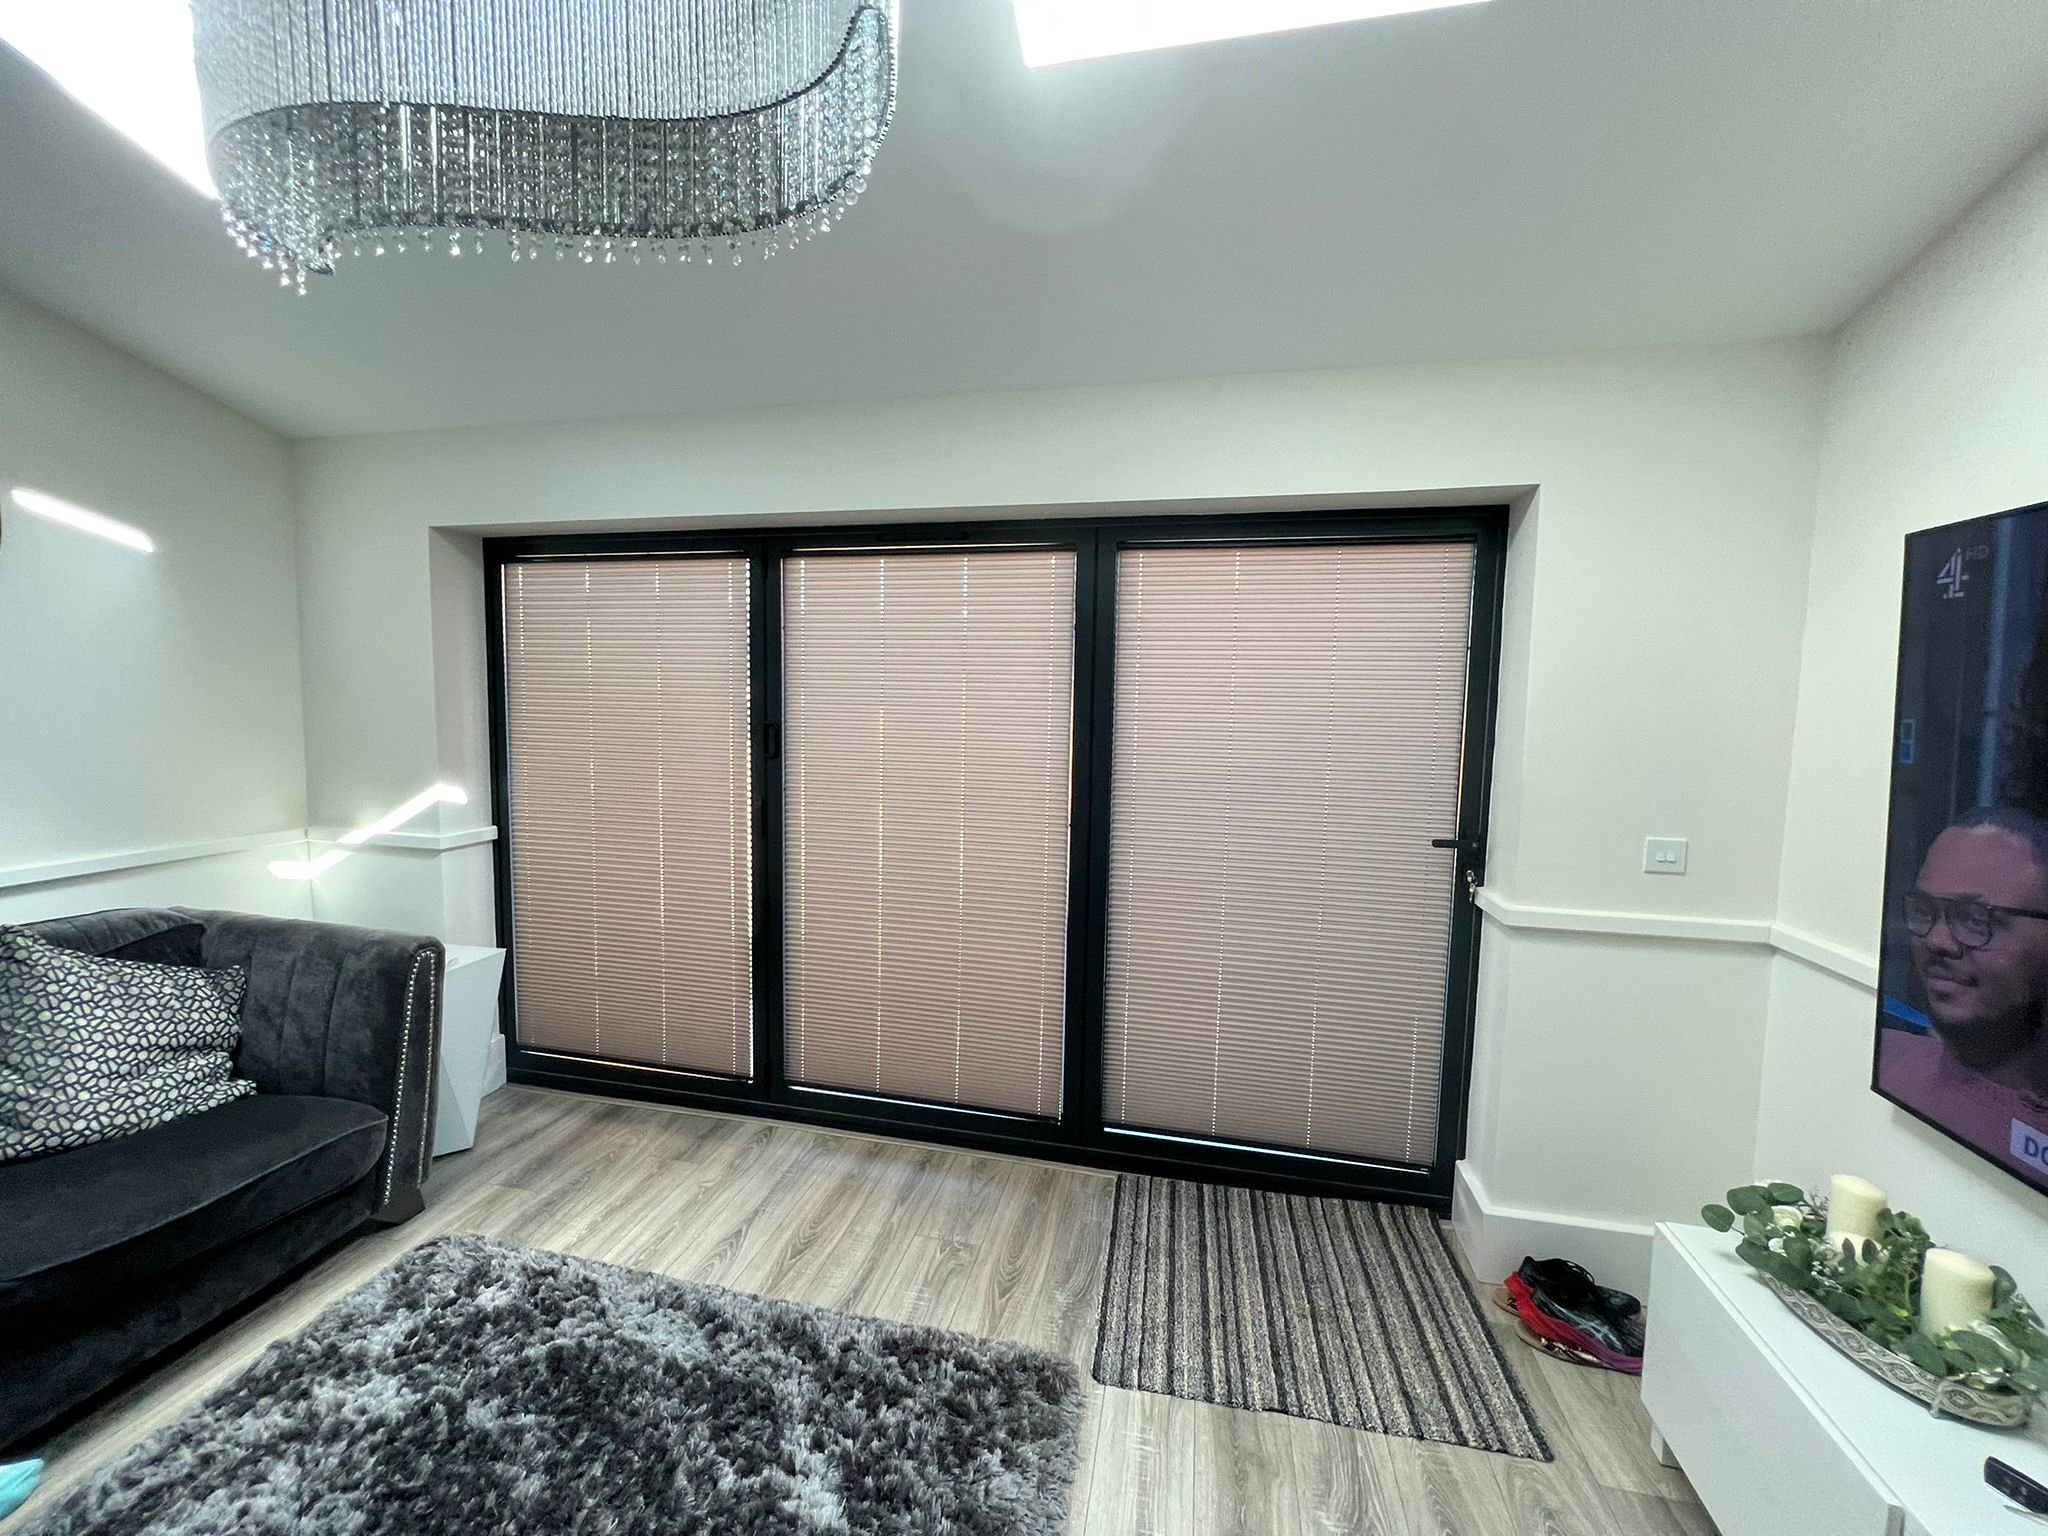 pleated blinds on bi-fold doors in lounge